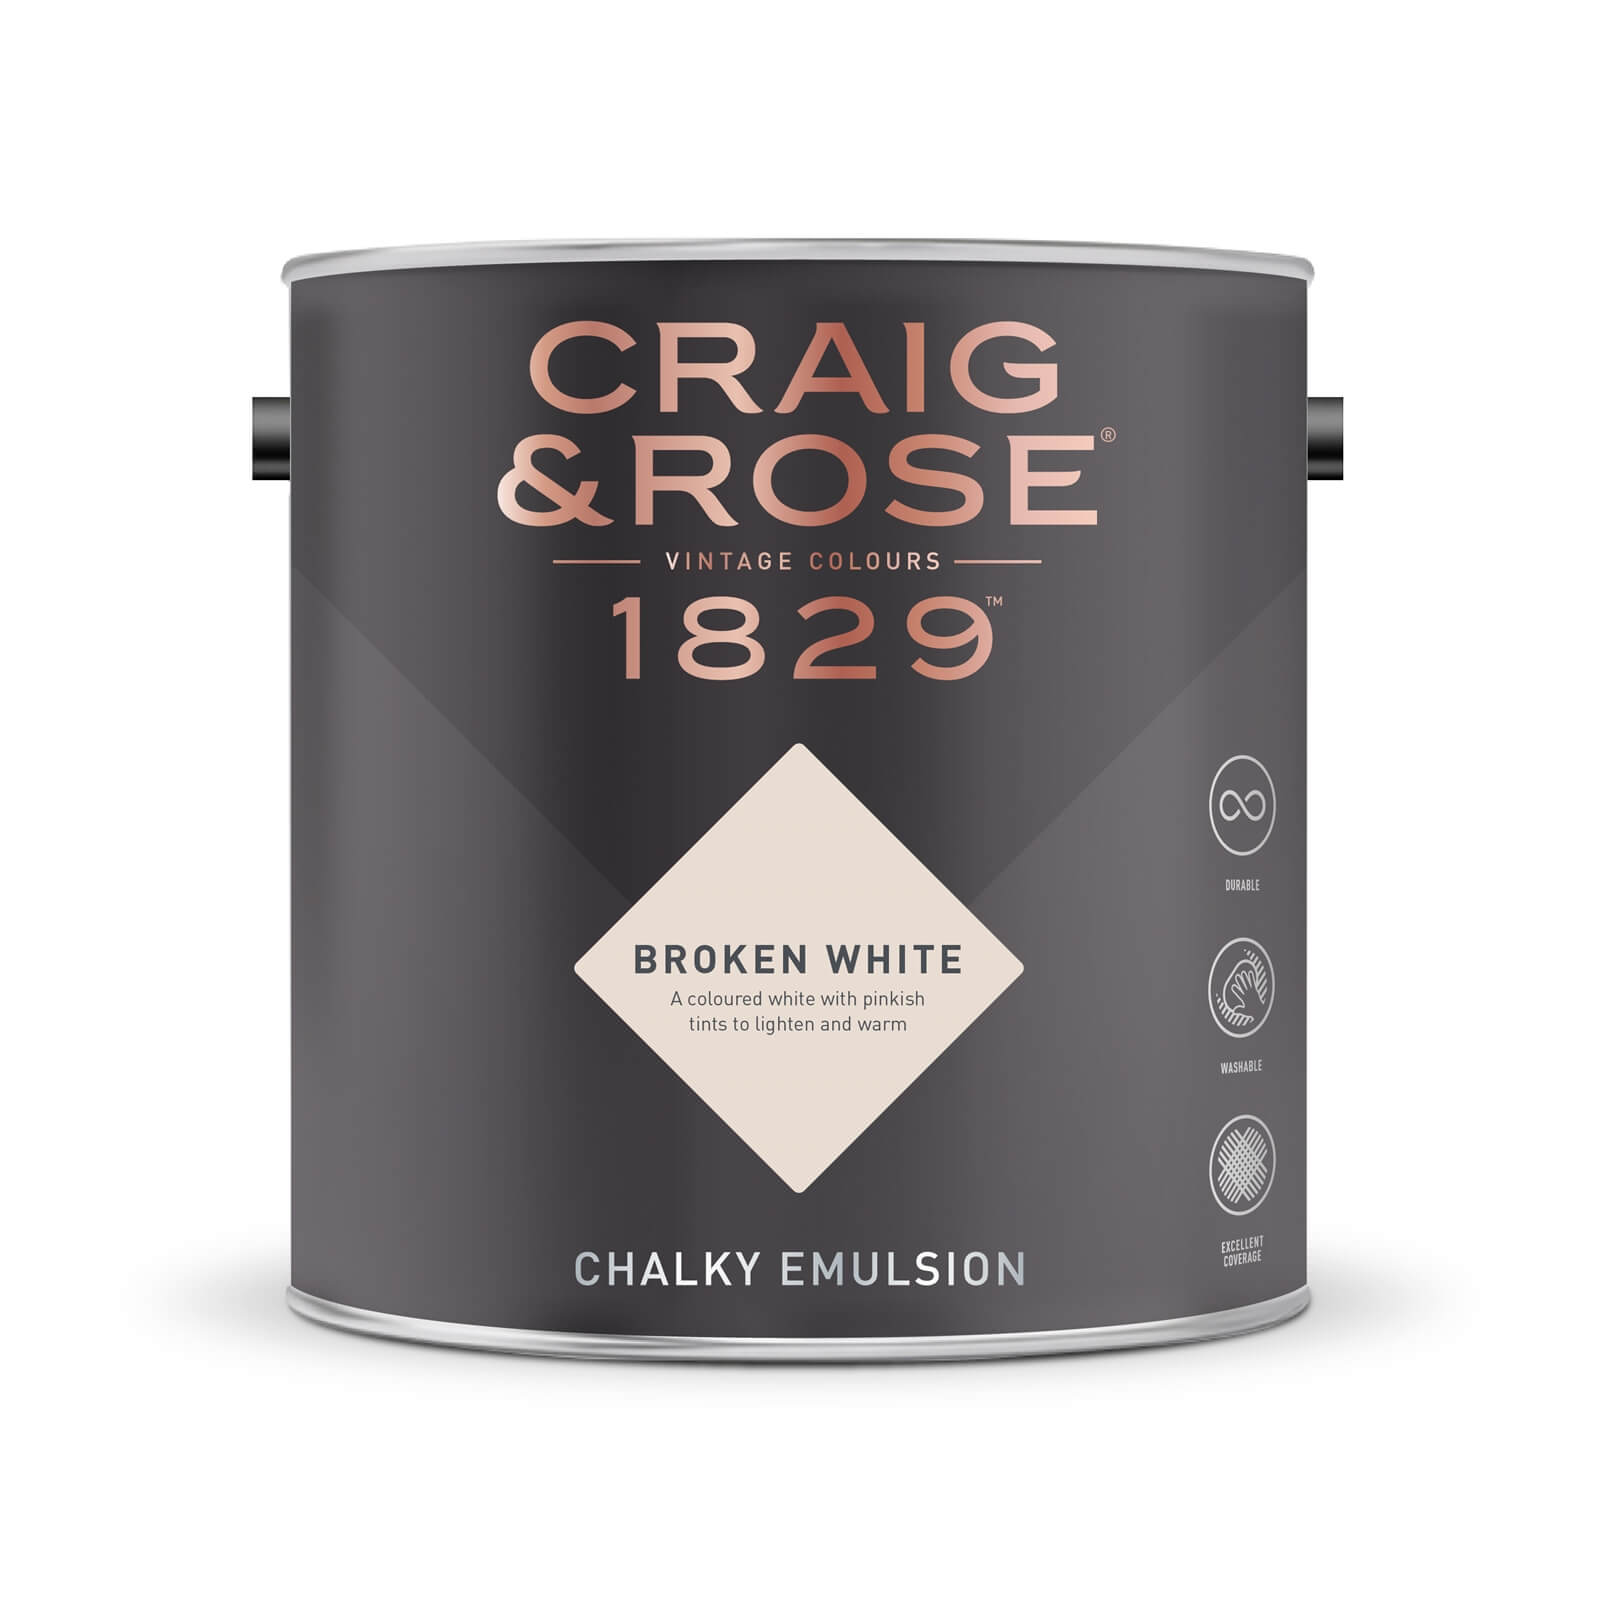 Craig & Rose 1829 Chalky Emulsion Paint Broken White - 5L